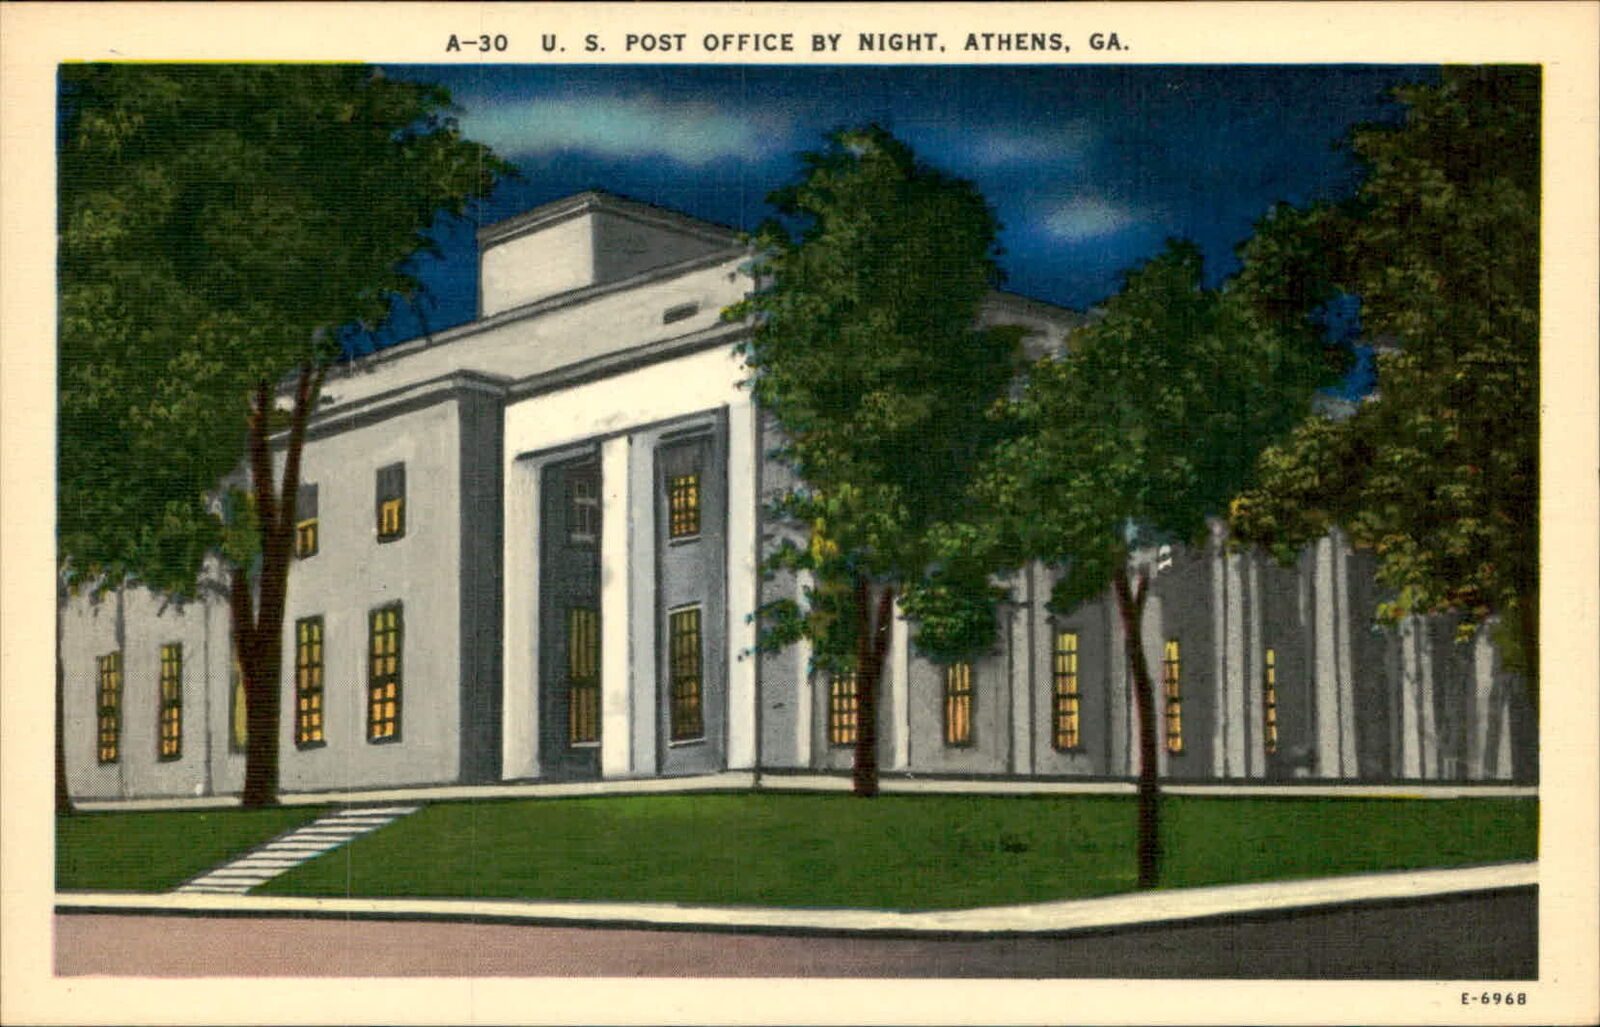 Postcard: 1 A-30 U. S. POST OFFICE BY NIGHT, ATHENS, GA. E-6968